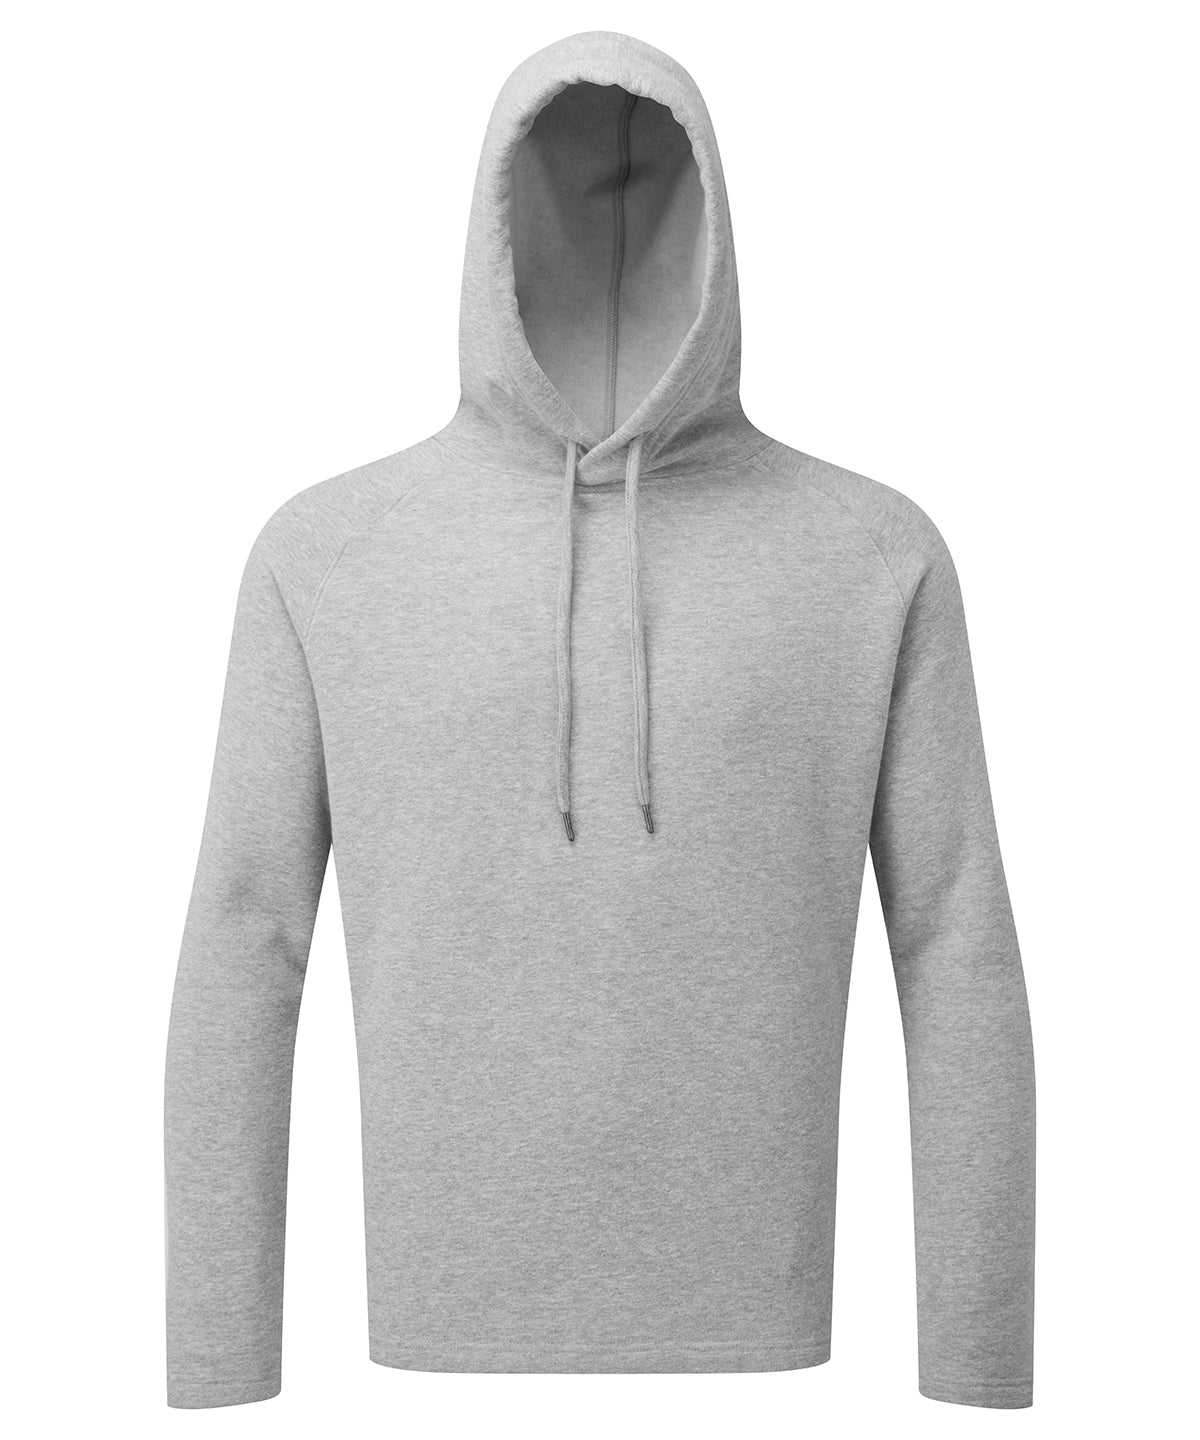 Men's TriDri® hoodie